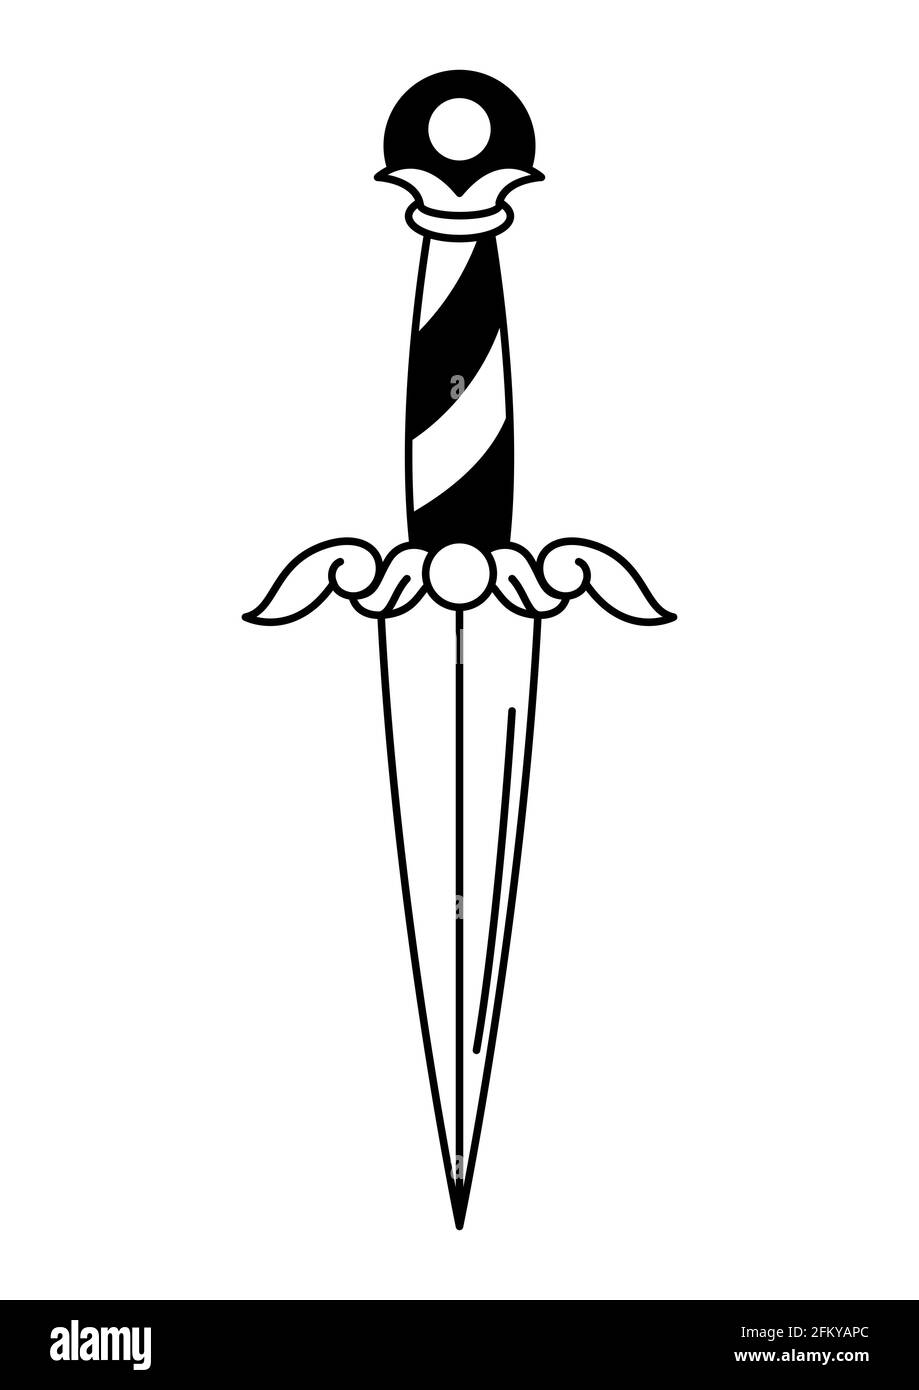 Flying Raijin Kunai Knife done by Steffany at Seaport Tattoo Boston  r tattoos